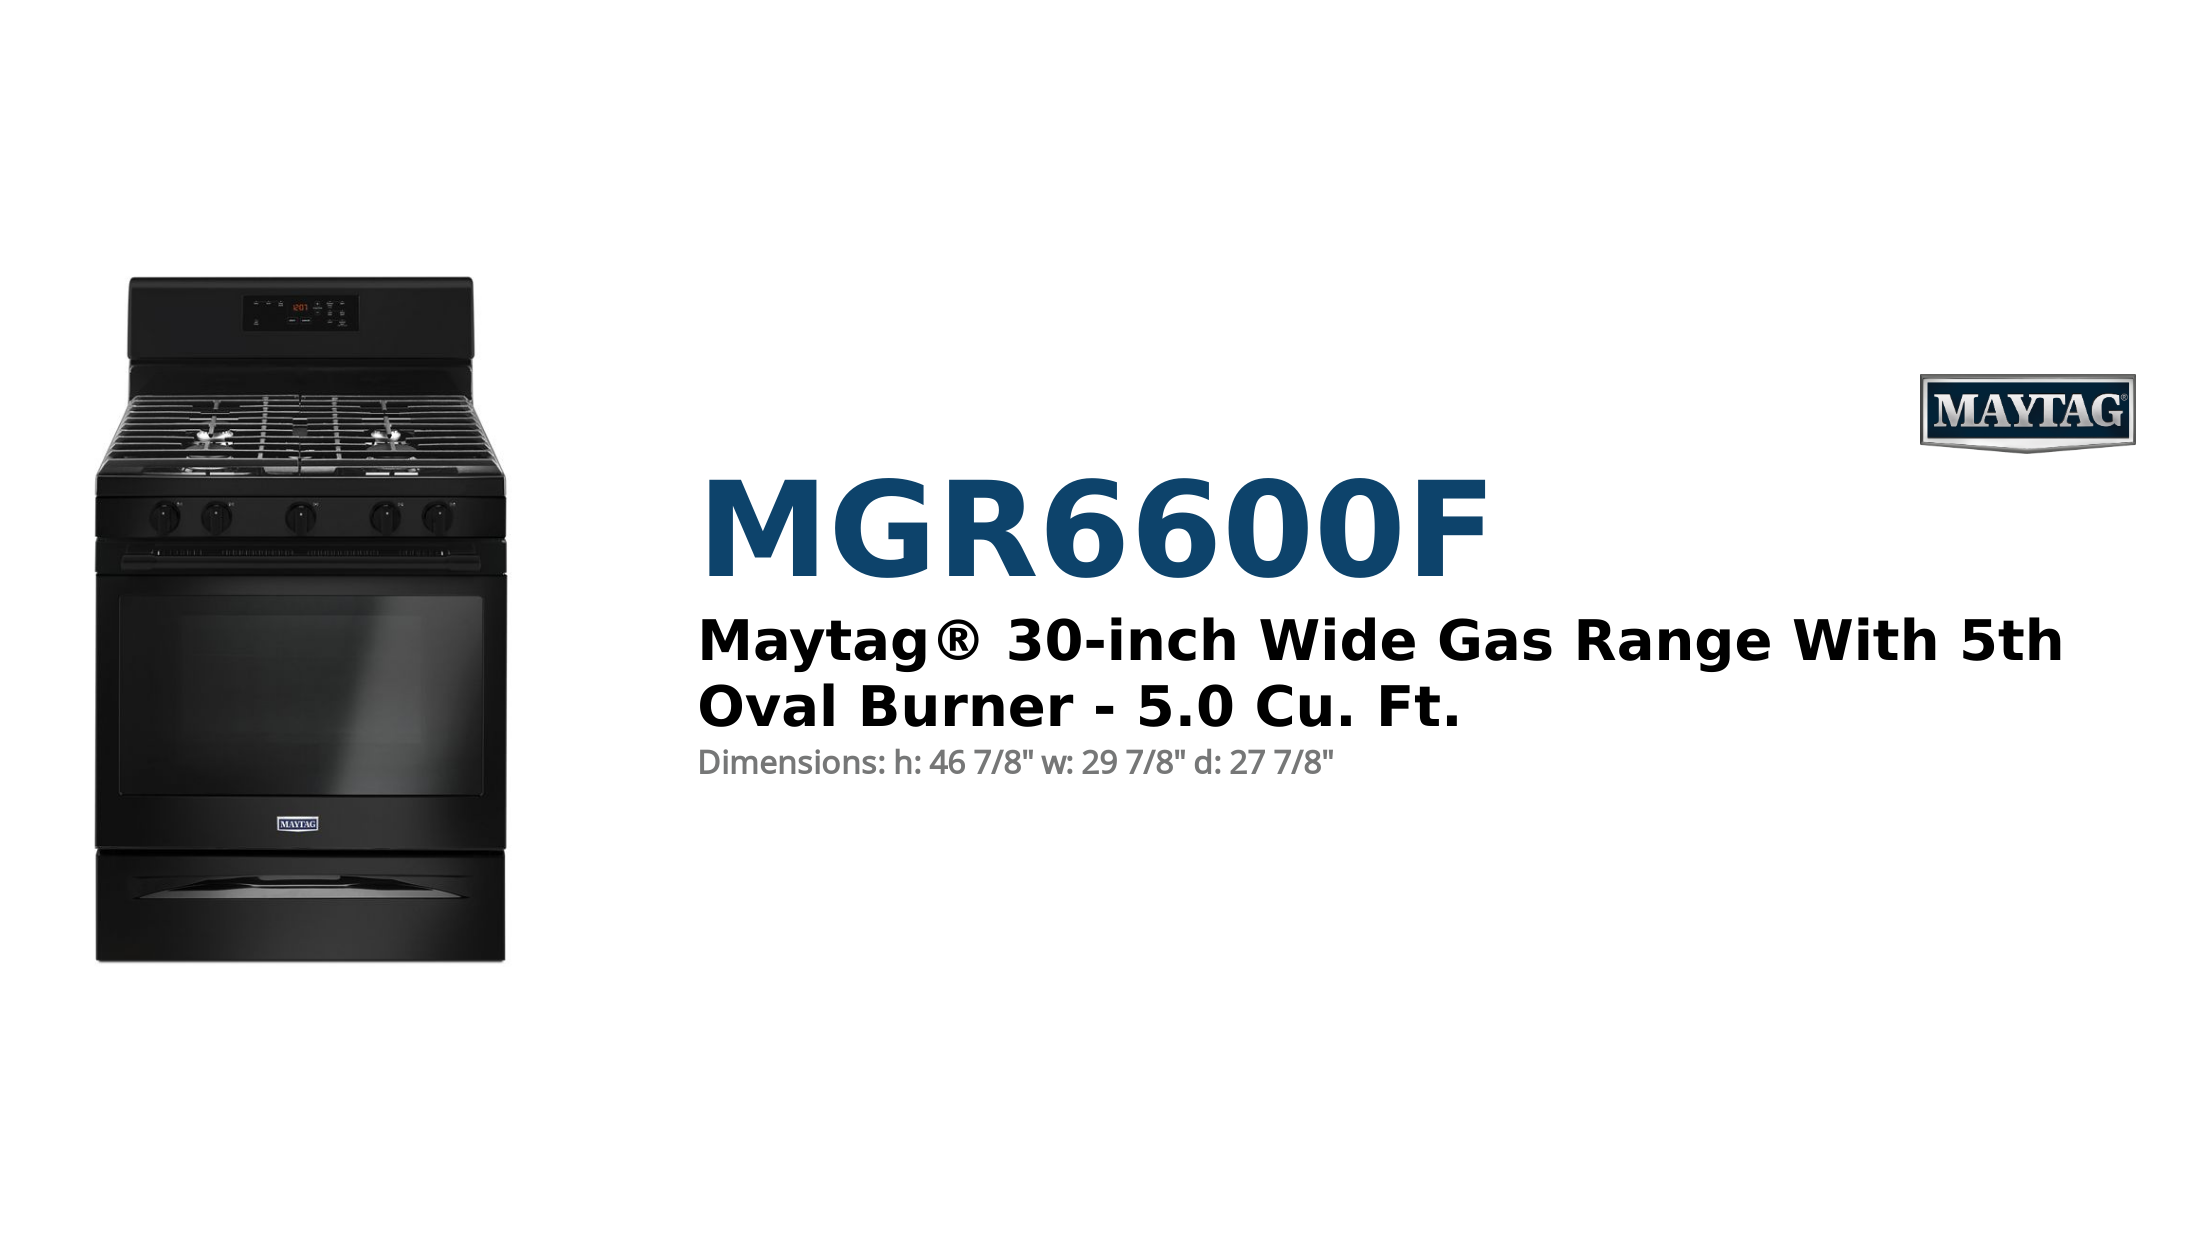 Maytag® 30-inch Wide Gas Range With 5th Oval Burner - 5.0 Cu. Ft.